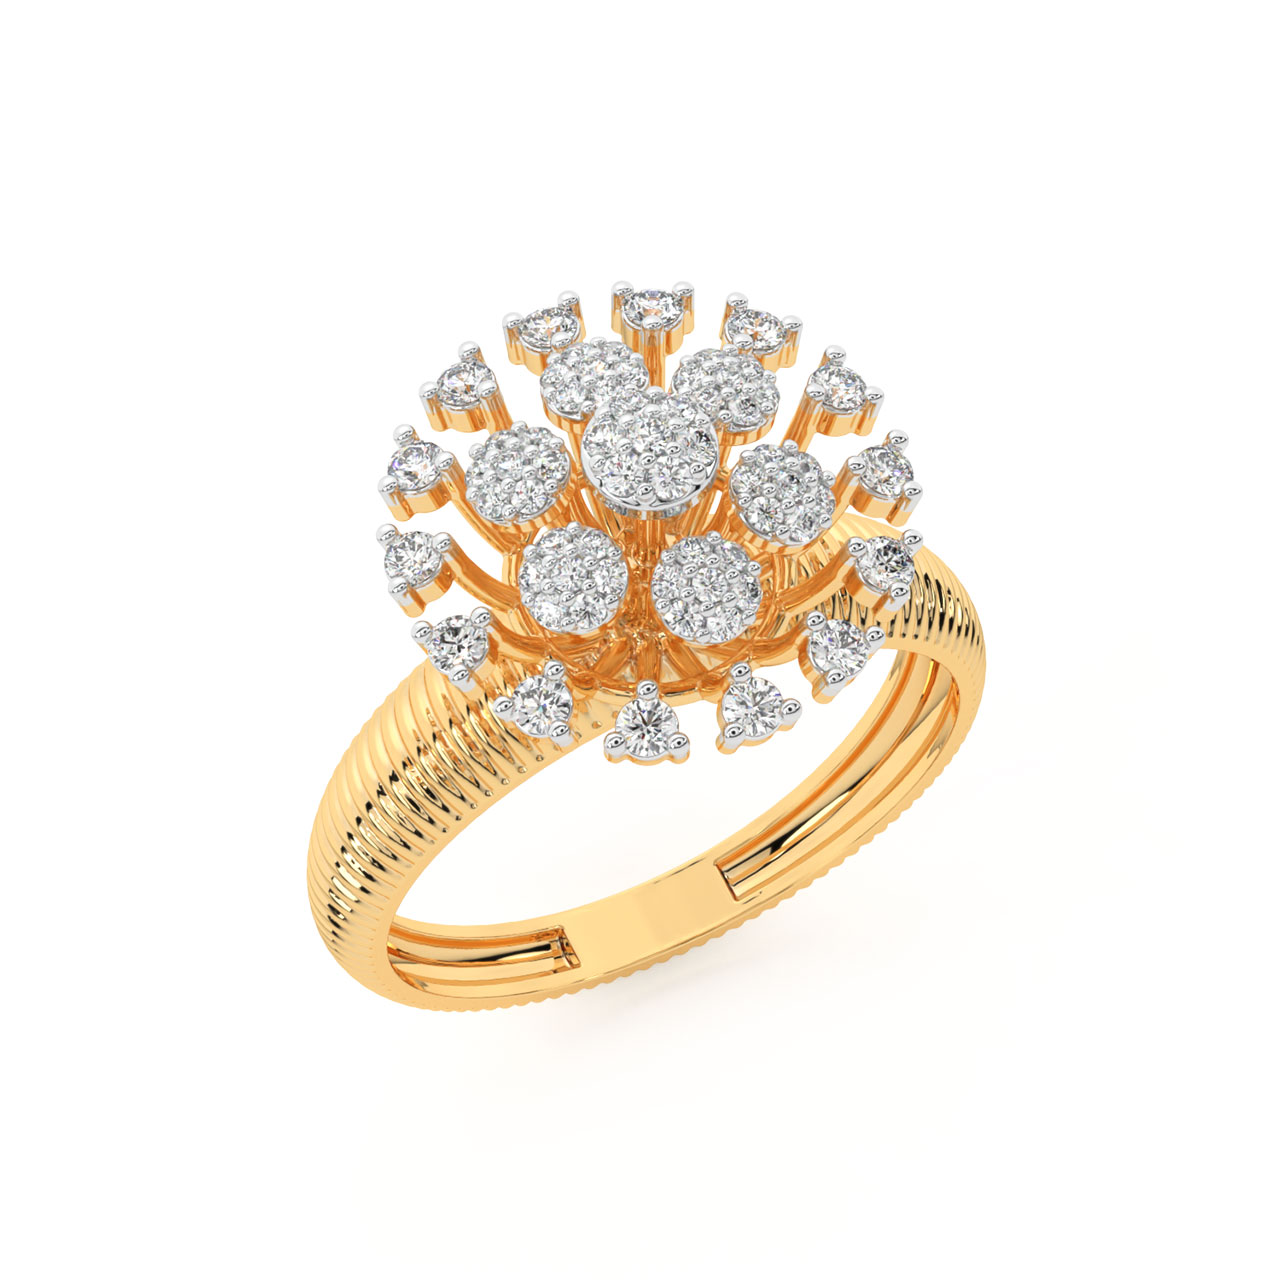 Susan Round Diamond Engagement Ring